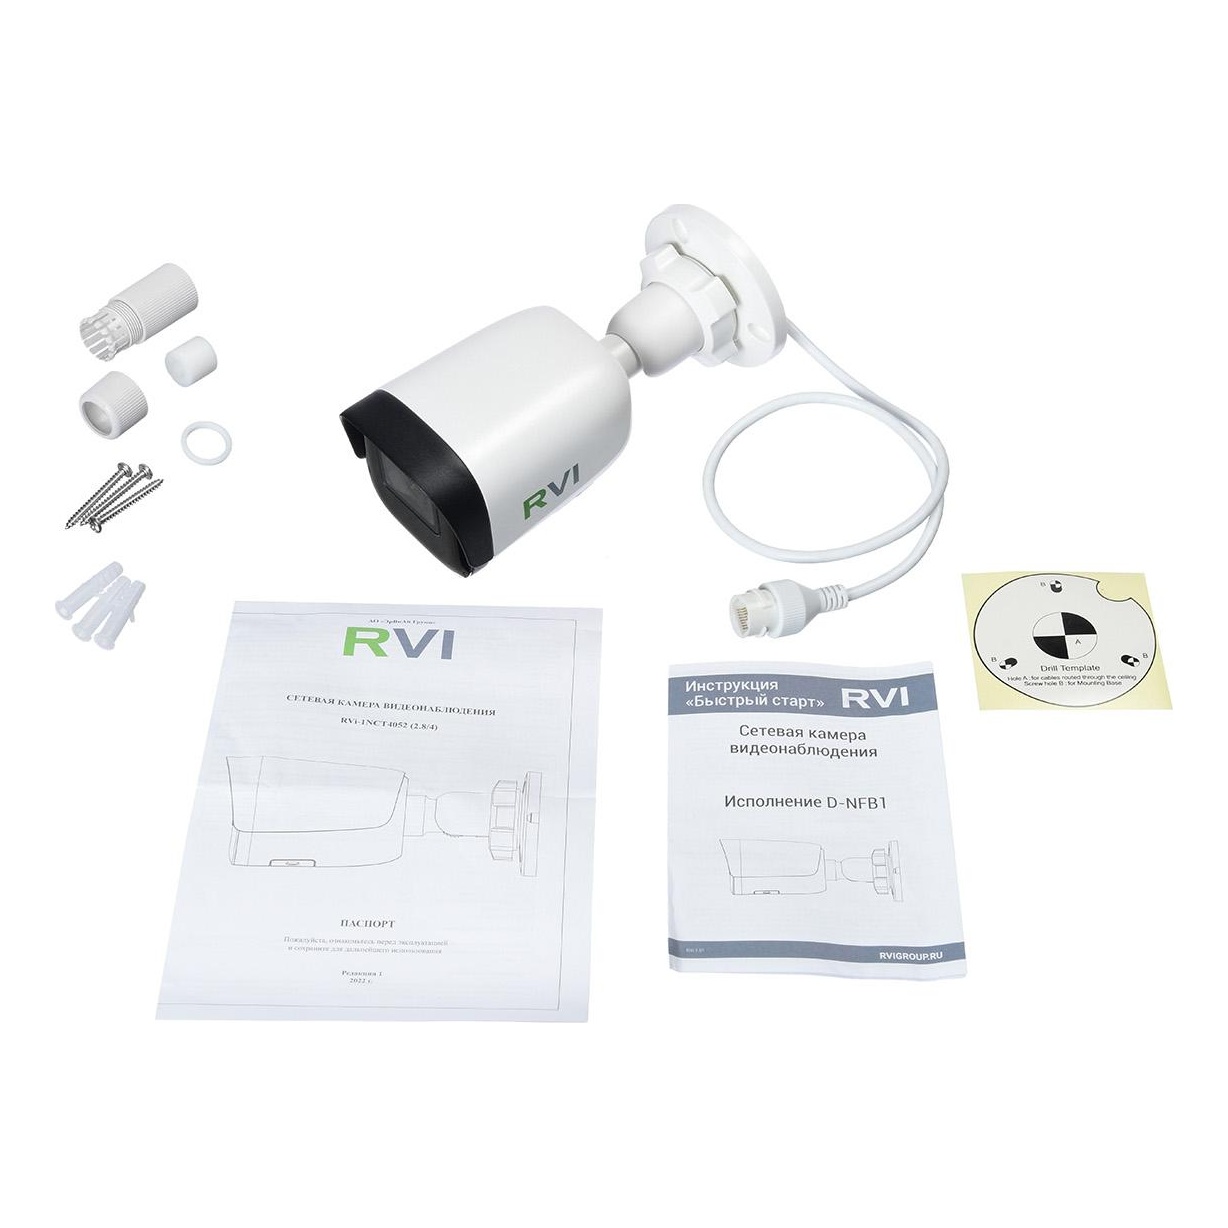 RVi-1NCT2022 (4) white IP видеокамера